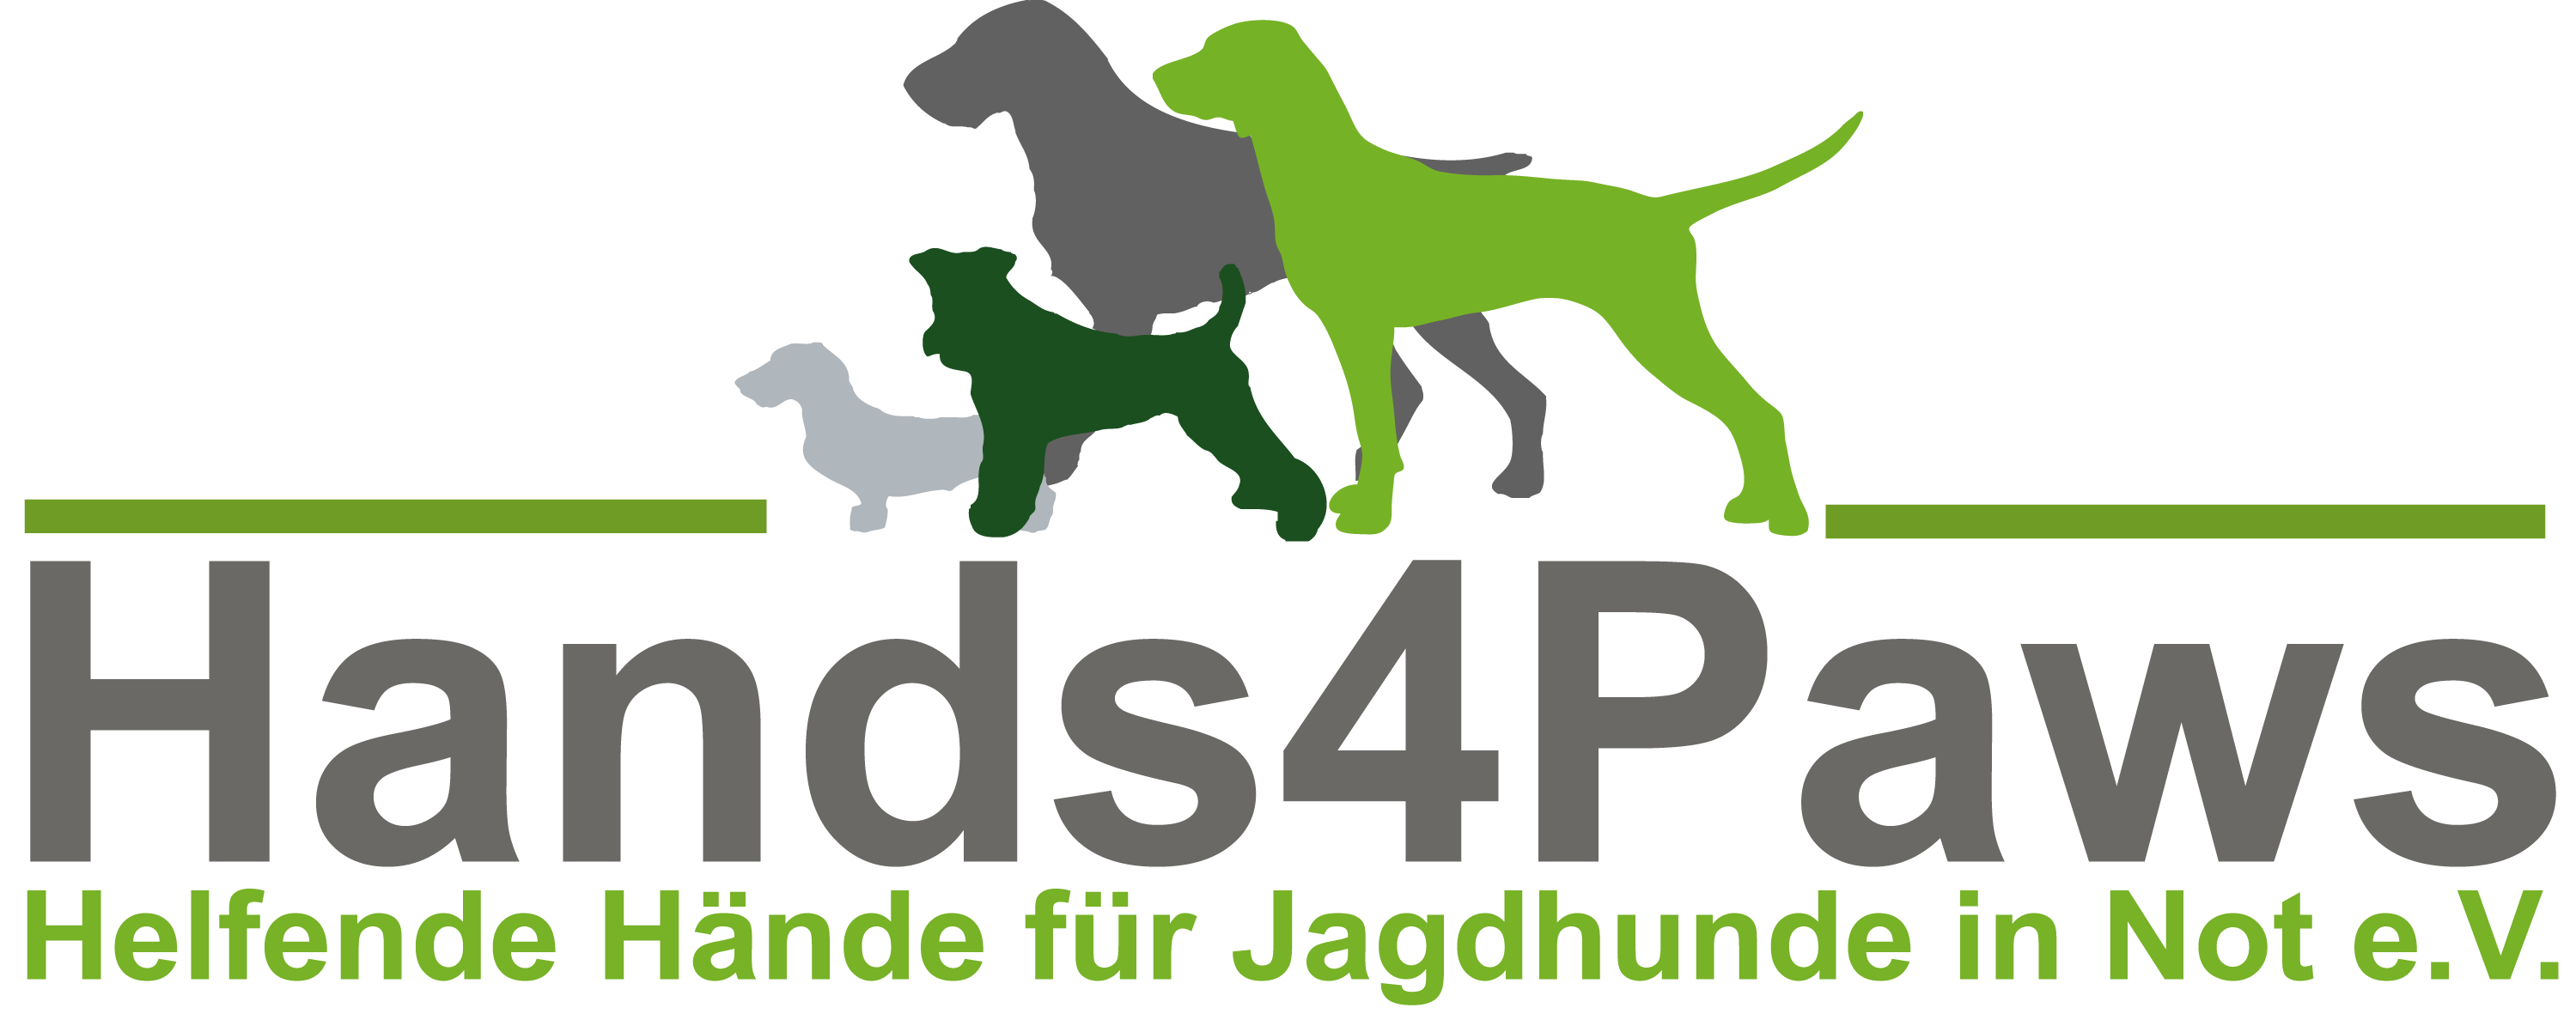 Hands4Paws - Helfende Hände für Jagdhunde in Not e.V.